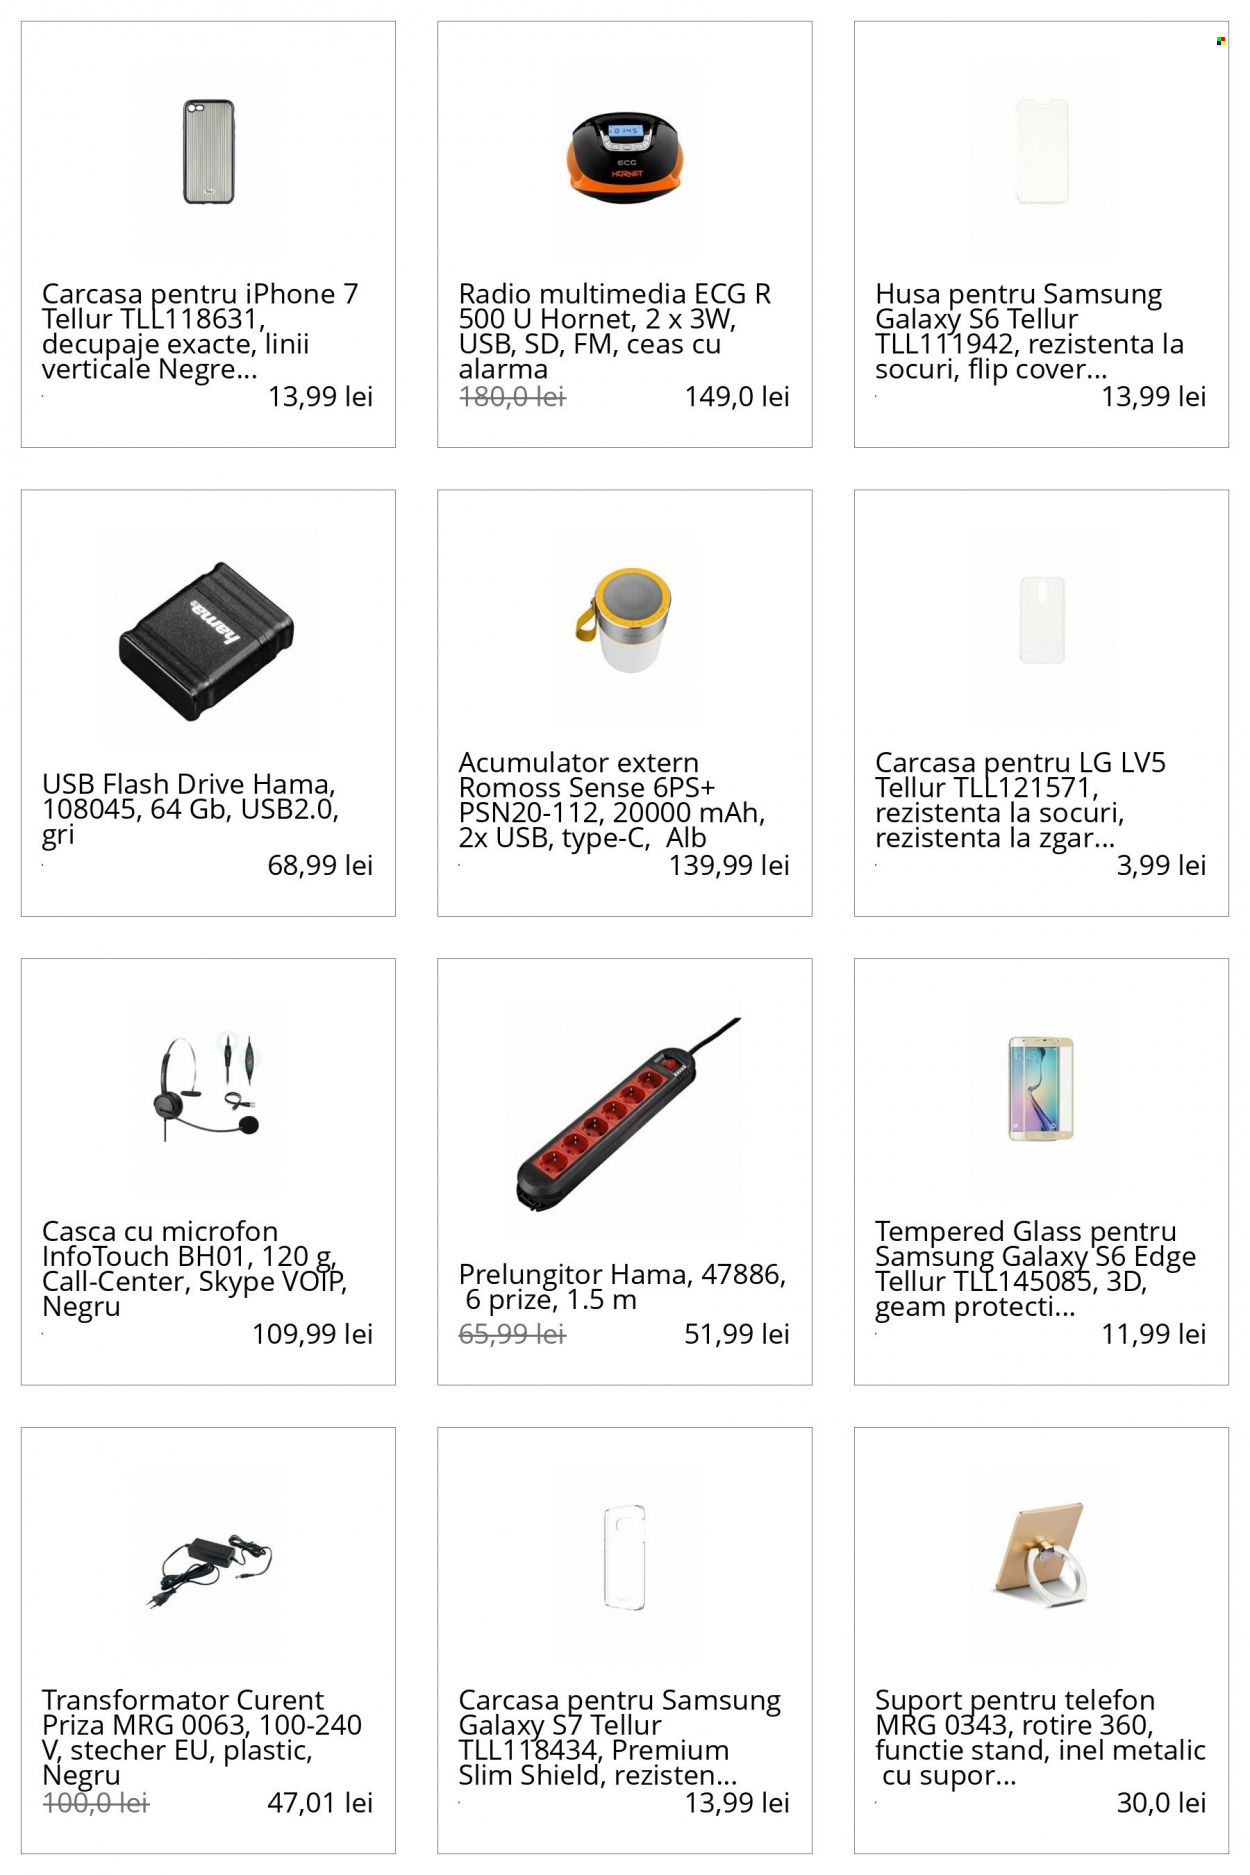 thumbnail - Cataloage elefant.ro - Produse în vânzare - Samsung, LG, ceas, telefon, iPhone, iPhone 7, USB flash, Hama, inel. Pagina 7.